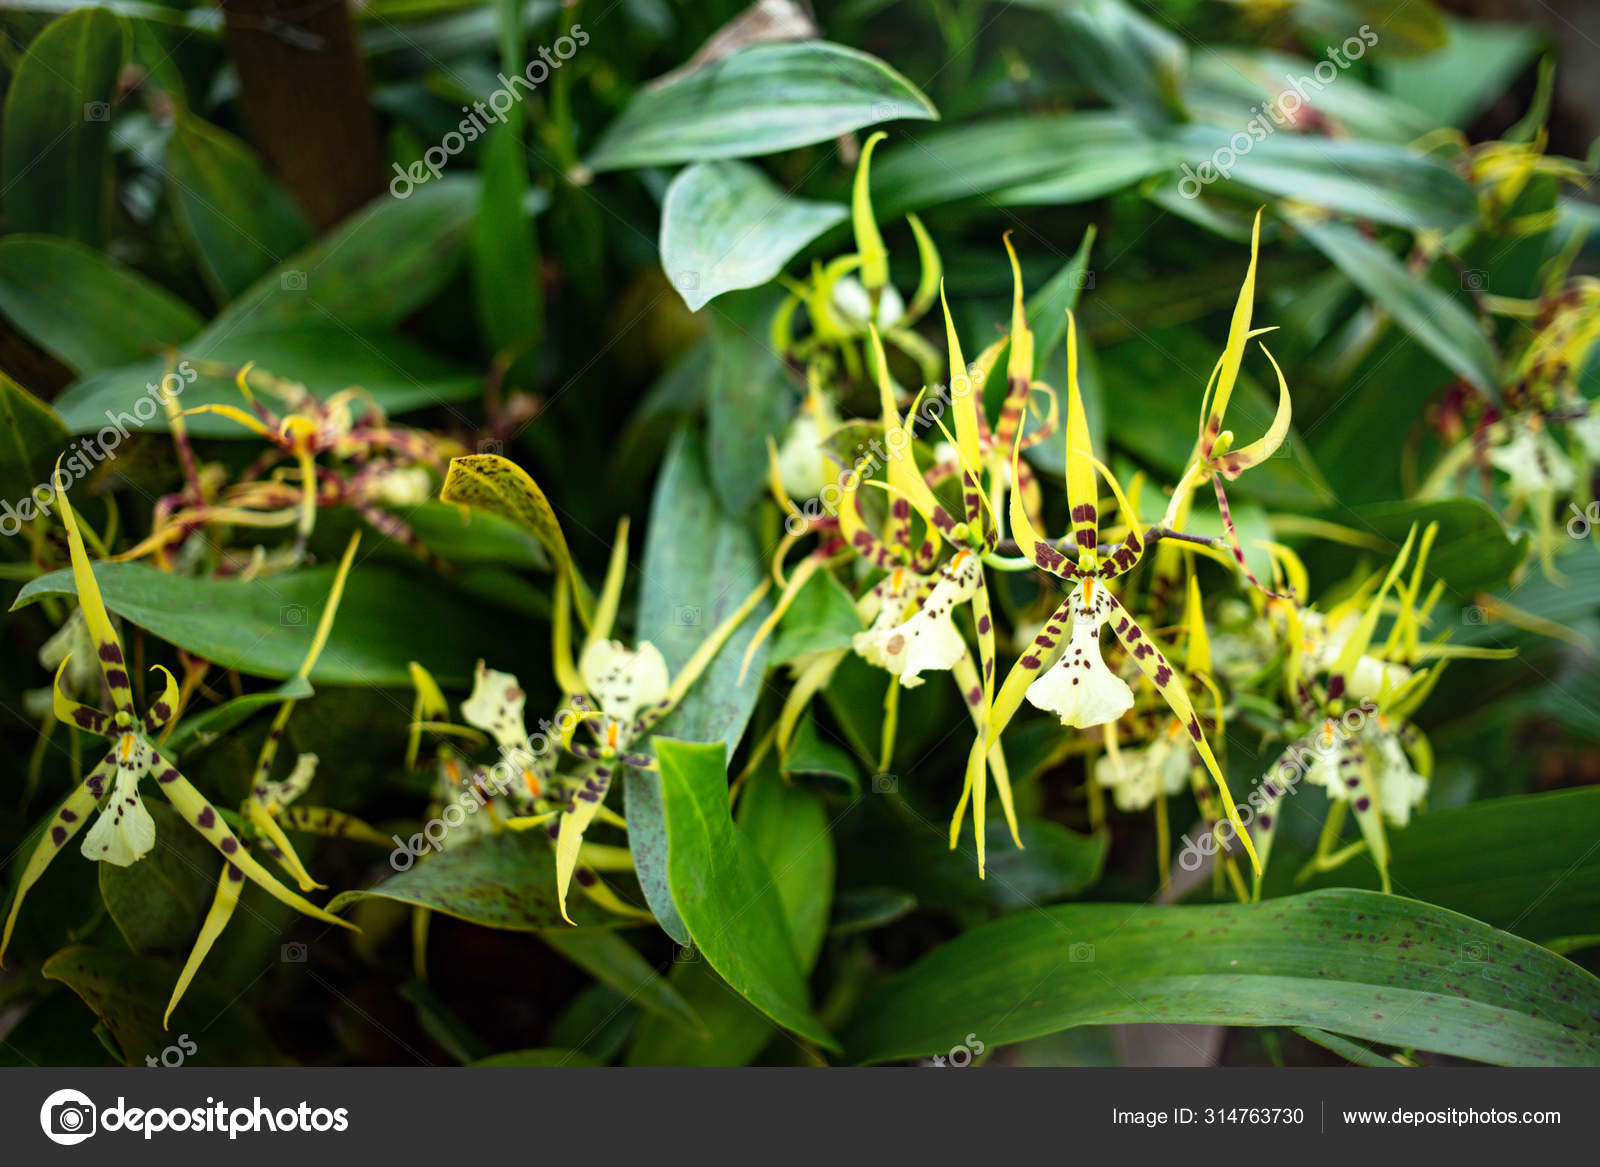 Fotos de Orquídea aranha, Imagens de Orquídea aranha sem royalties |  Depositphotos